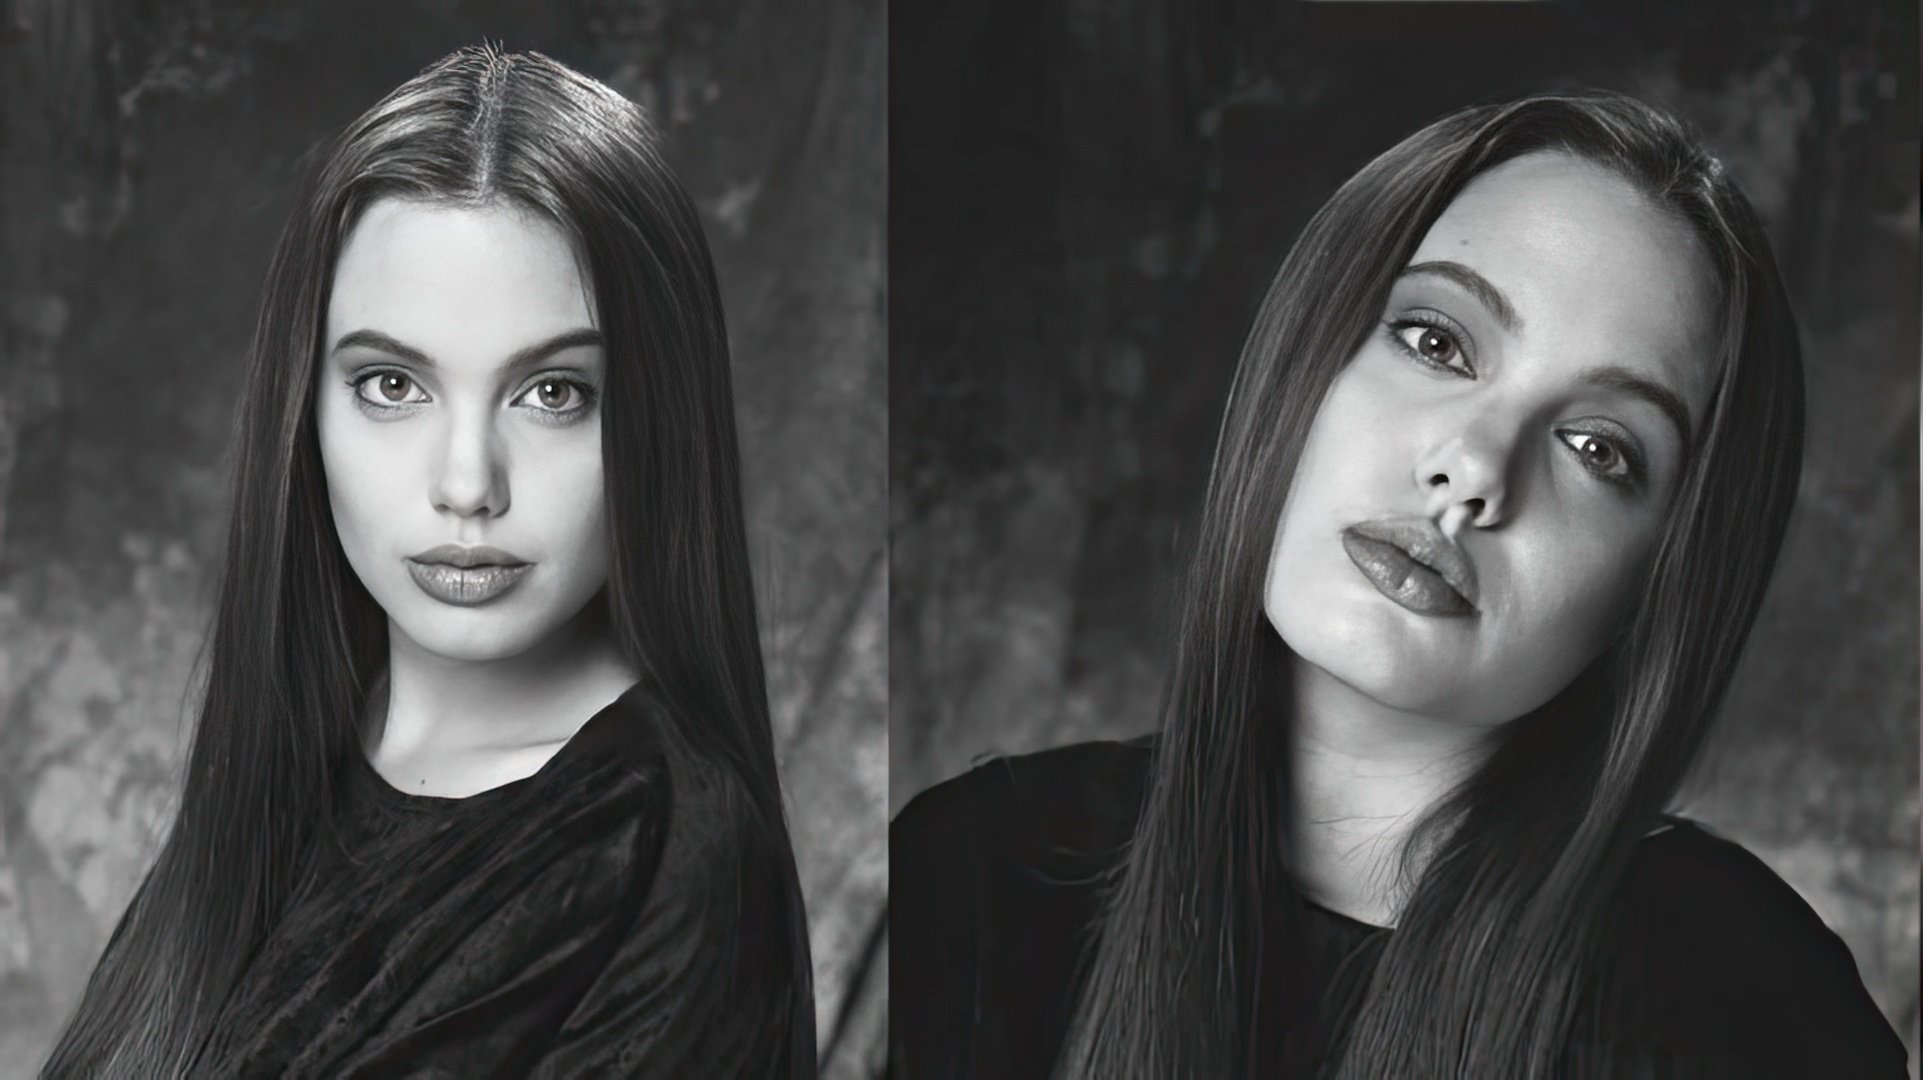 16-year-old Angelina Jolie